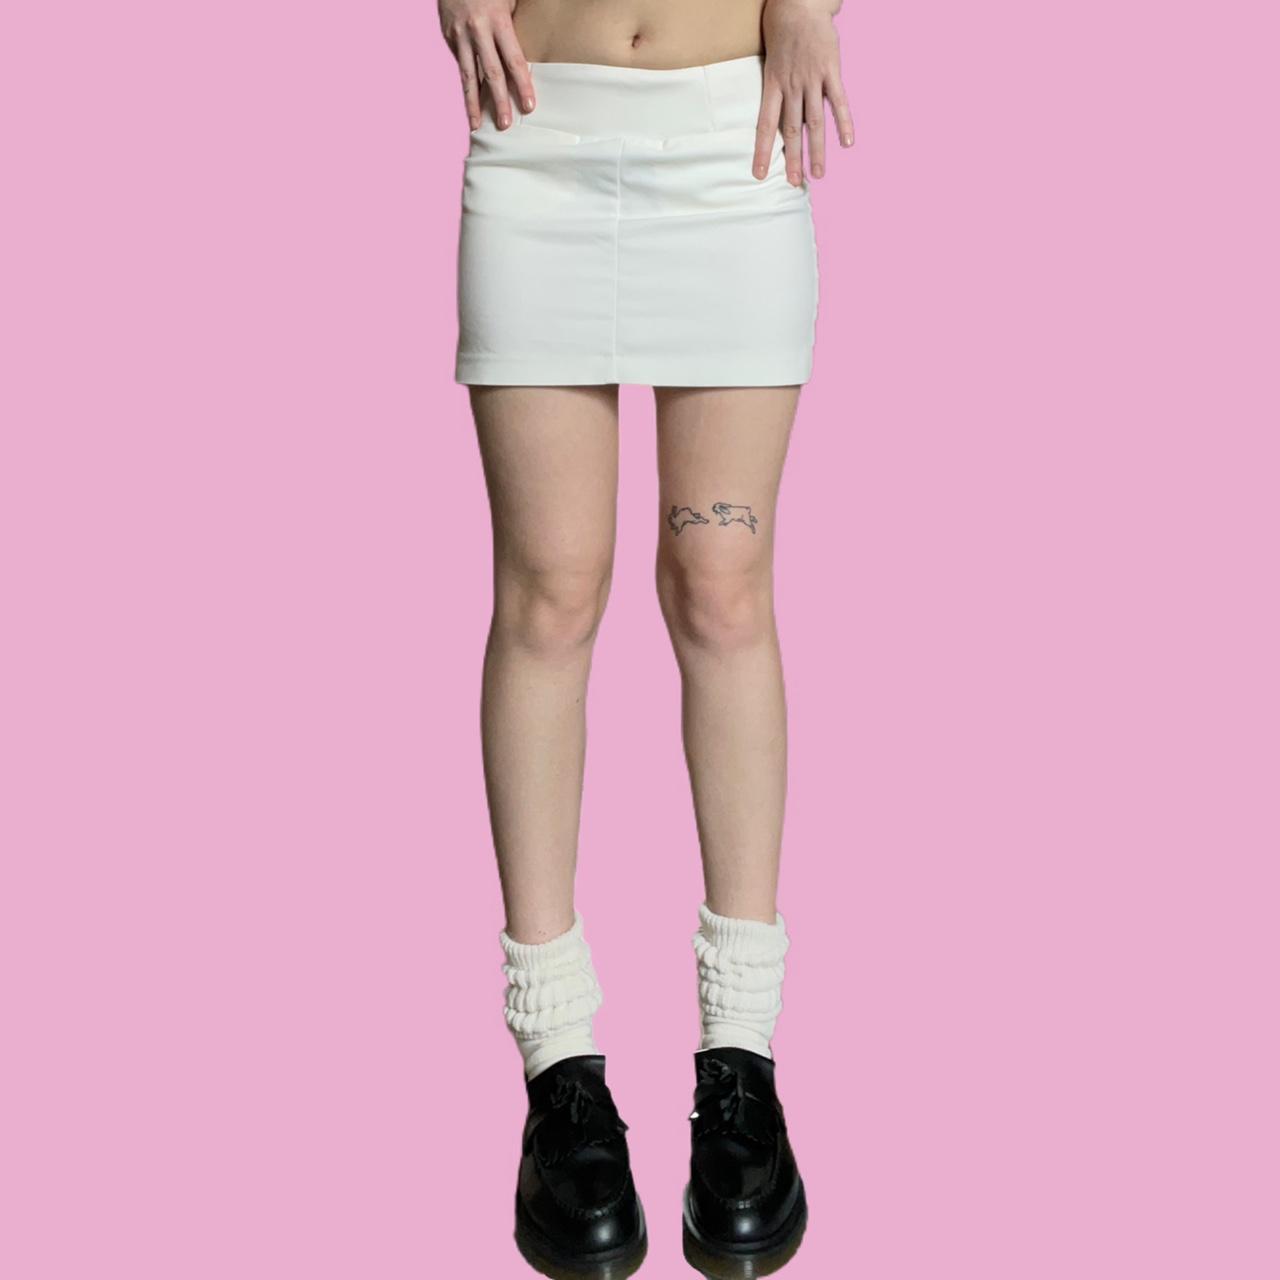 Product Image 1 - White mini skirt 💌

✨Details:

Color: white